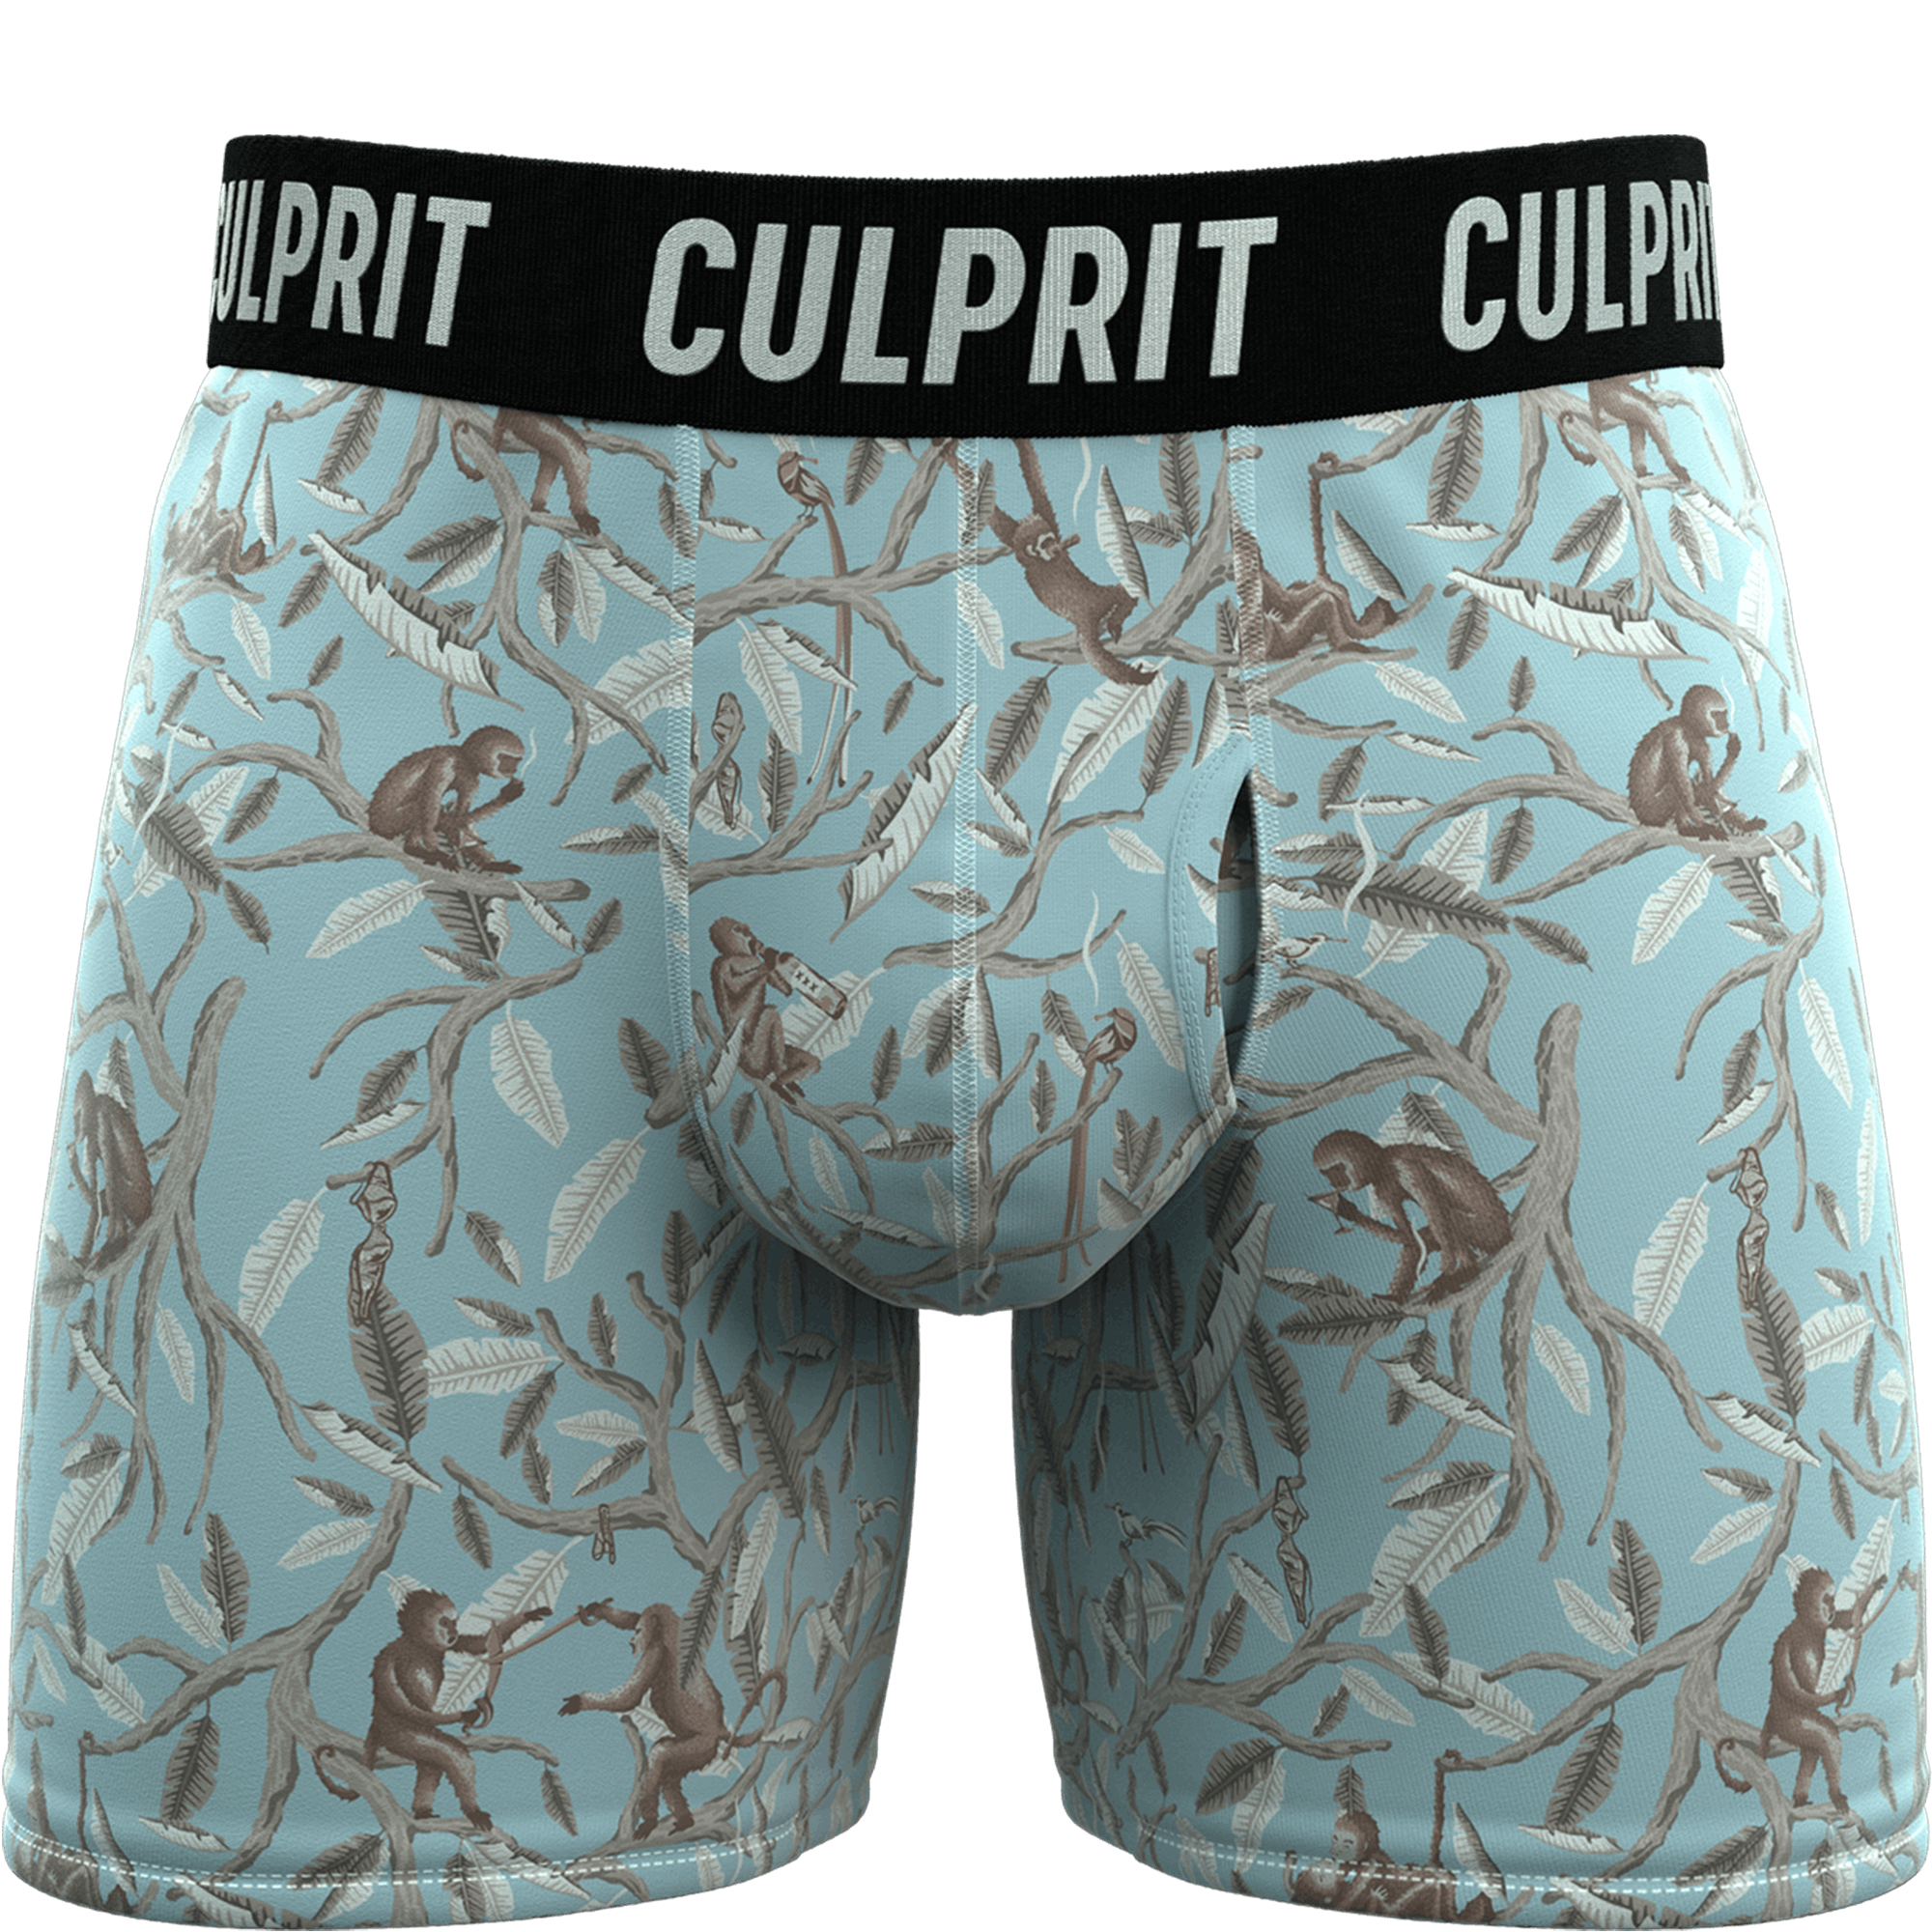 Morrison Seger on X: Culprit Underwear provides comfort so good